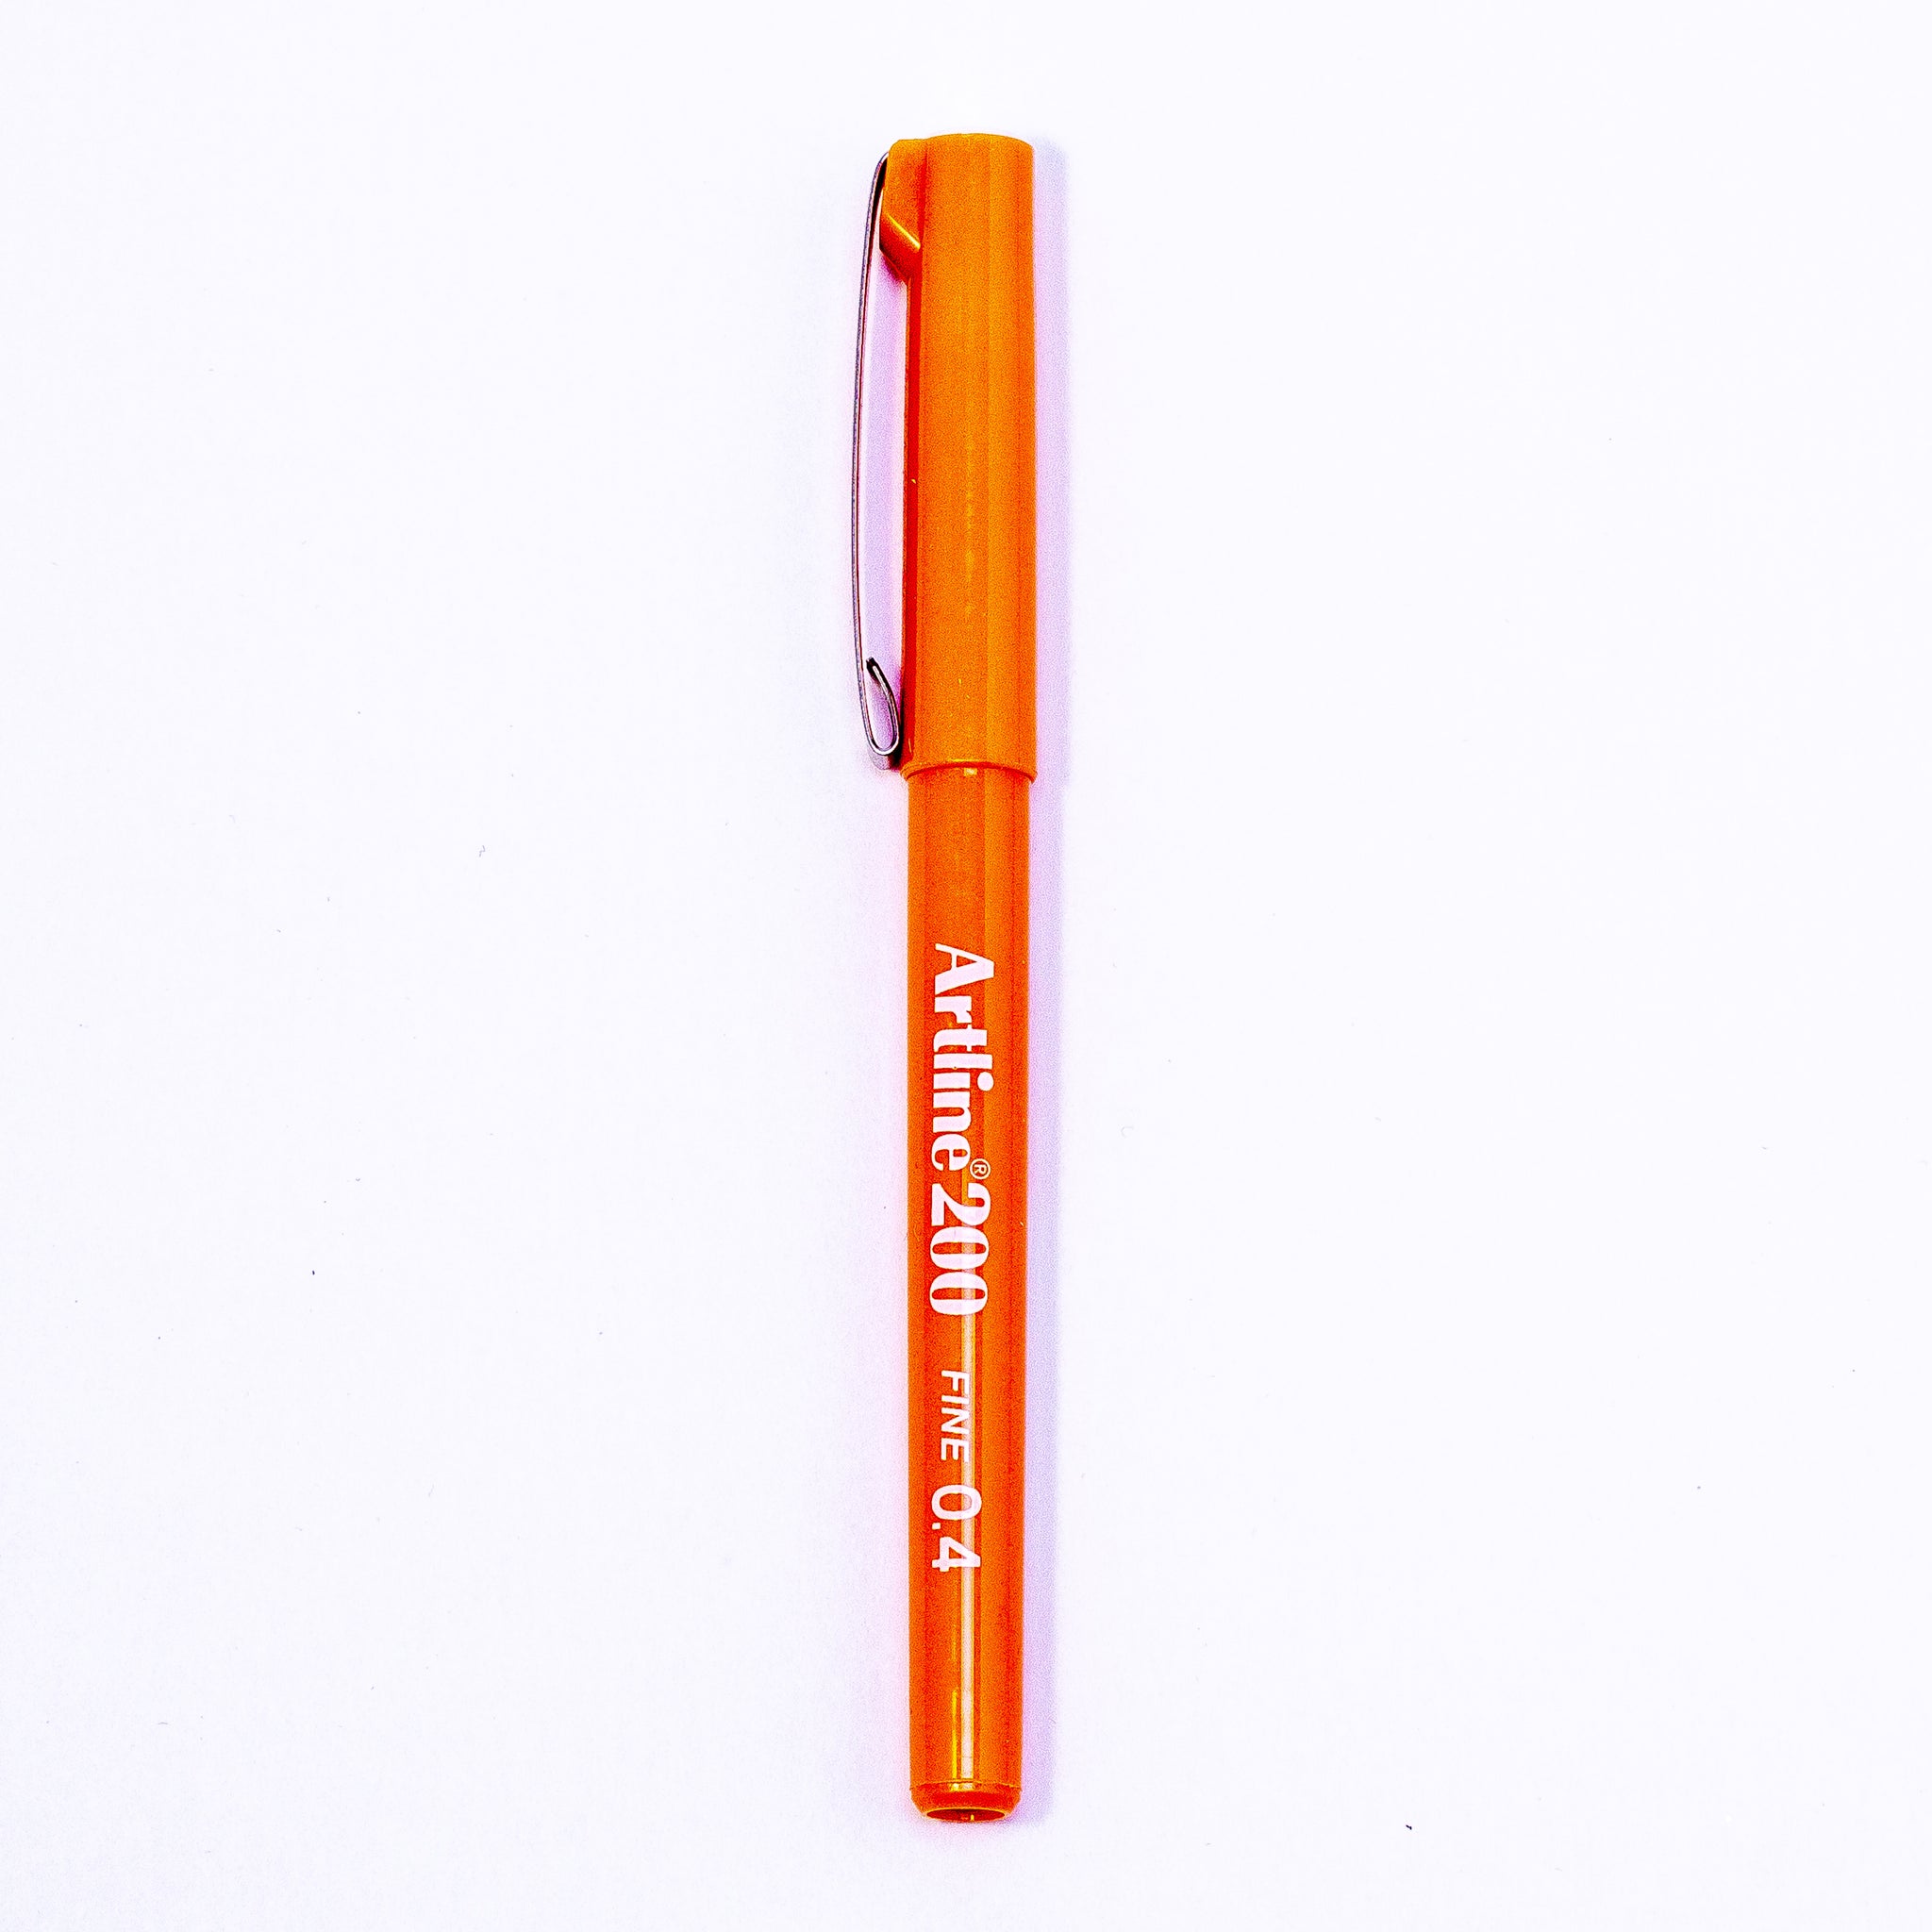 Artline 200 Fineliner Pen - Orange